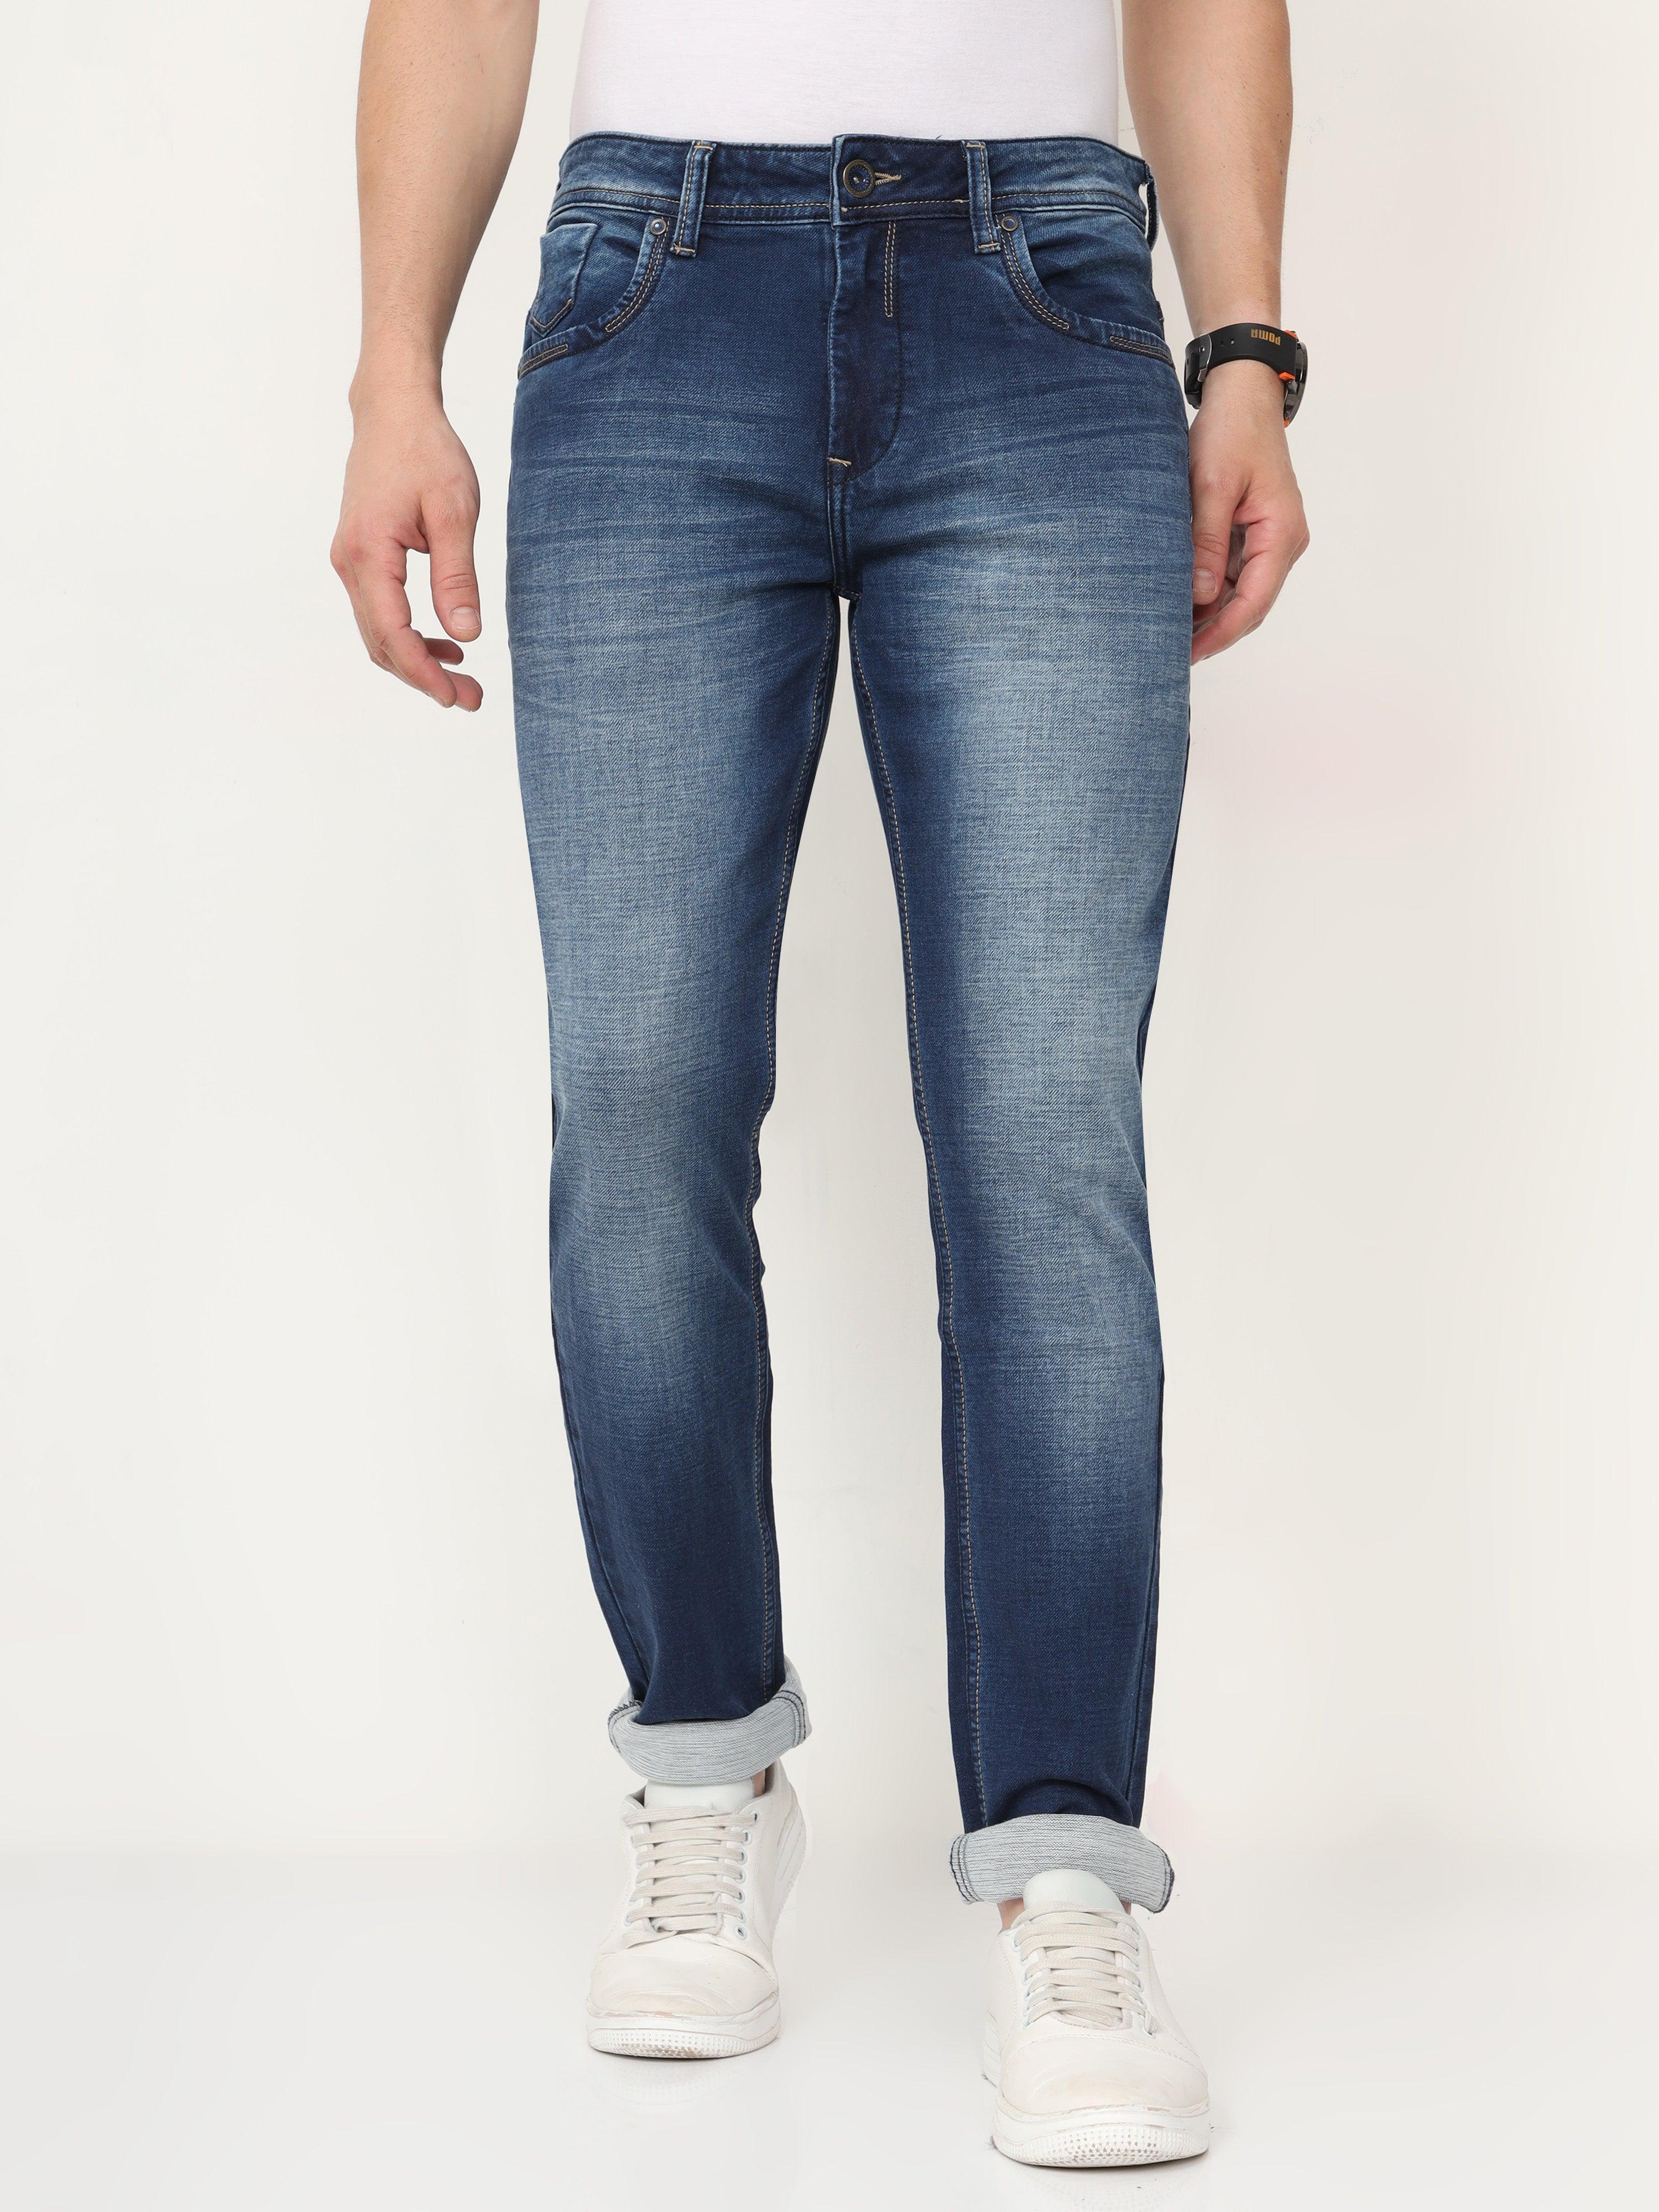 Men's Slim Fit Jeans - Blue